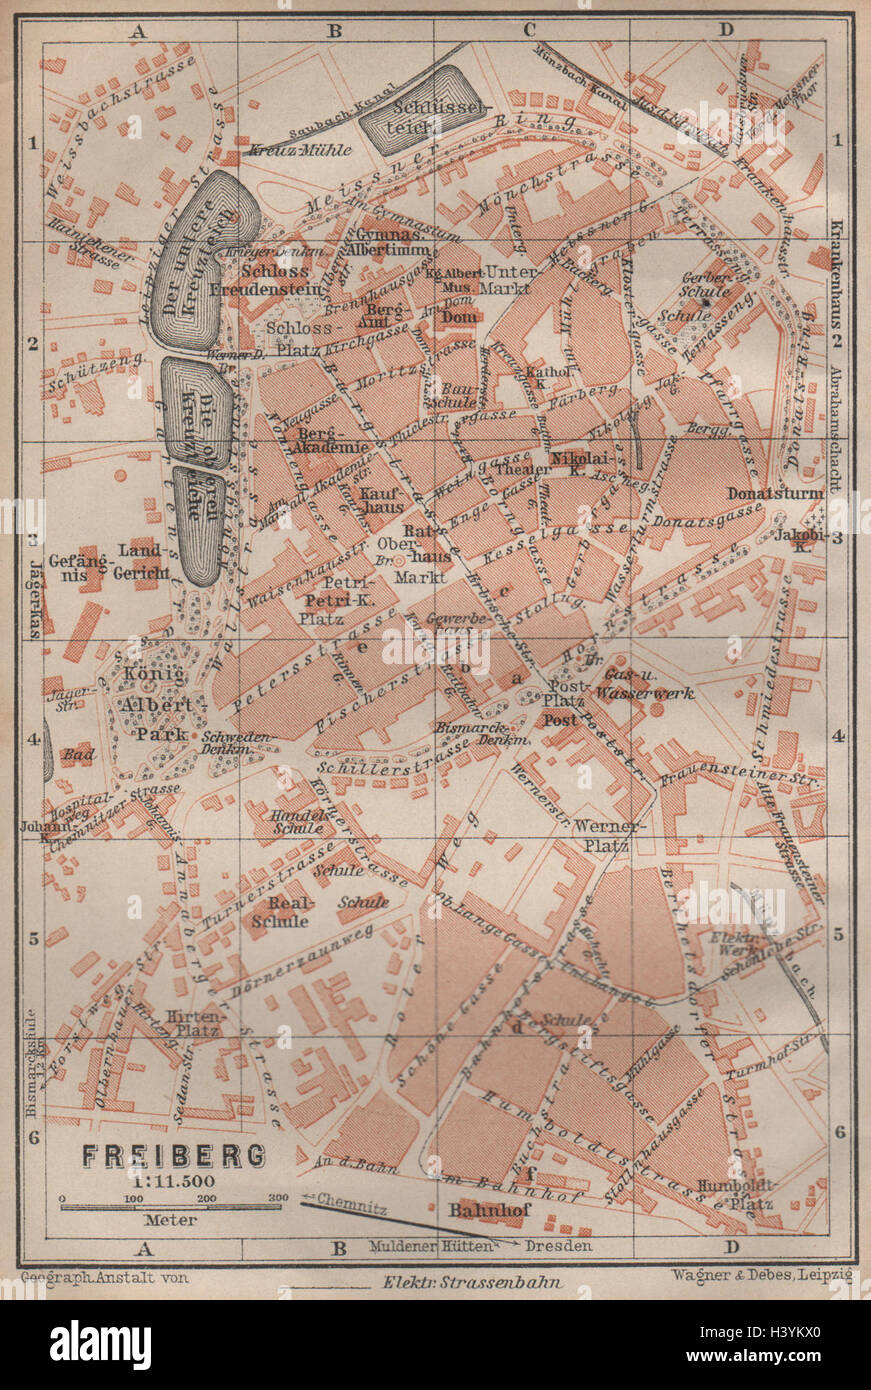 Saxony karte BAEDEKER 1904 old map FREIBERG antique town city stadtplan 